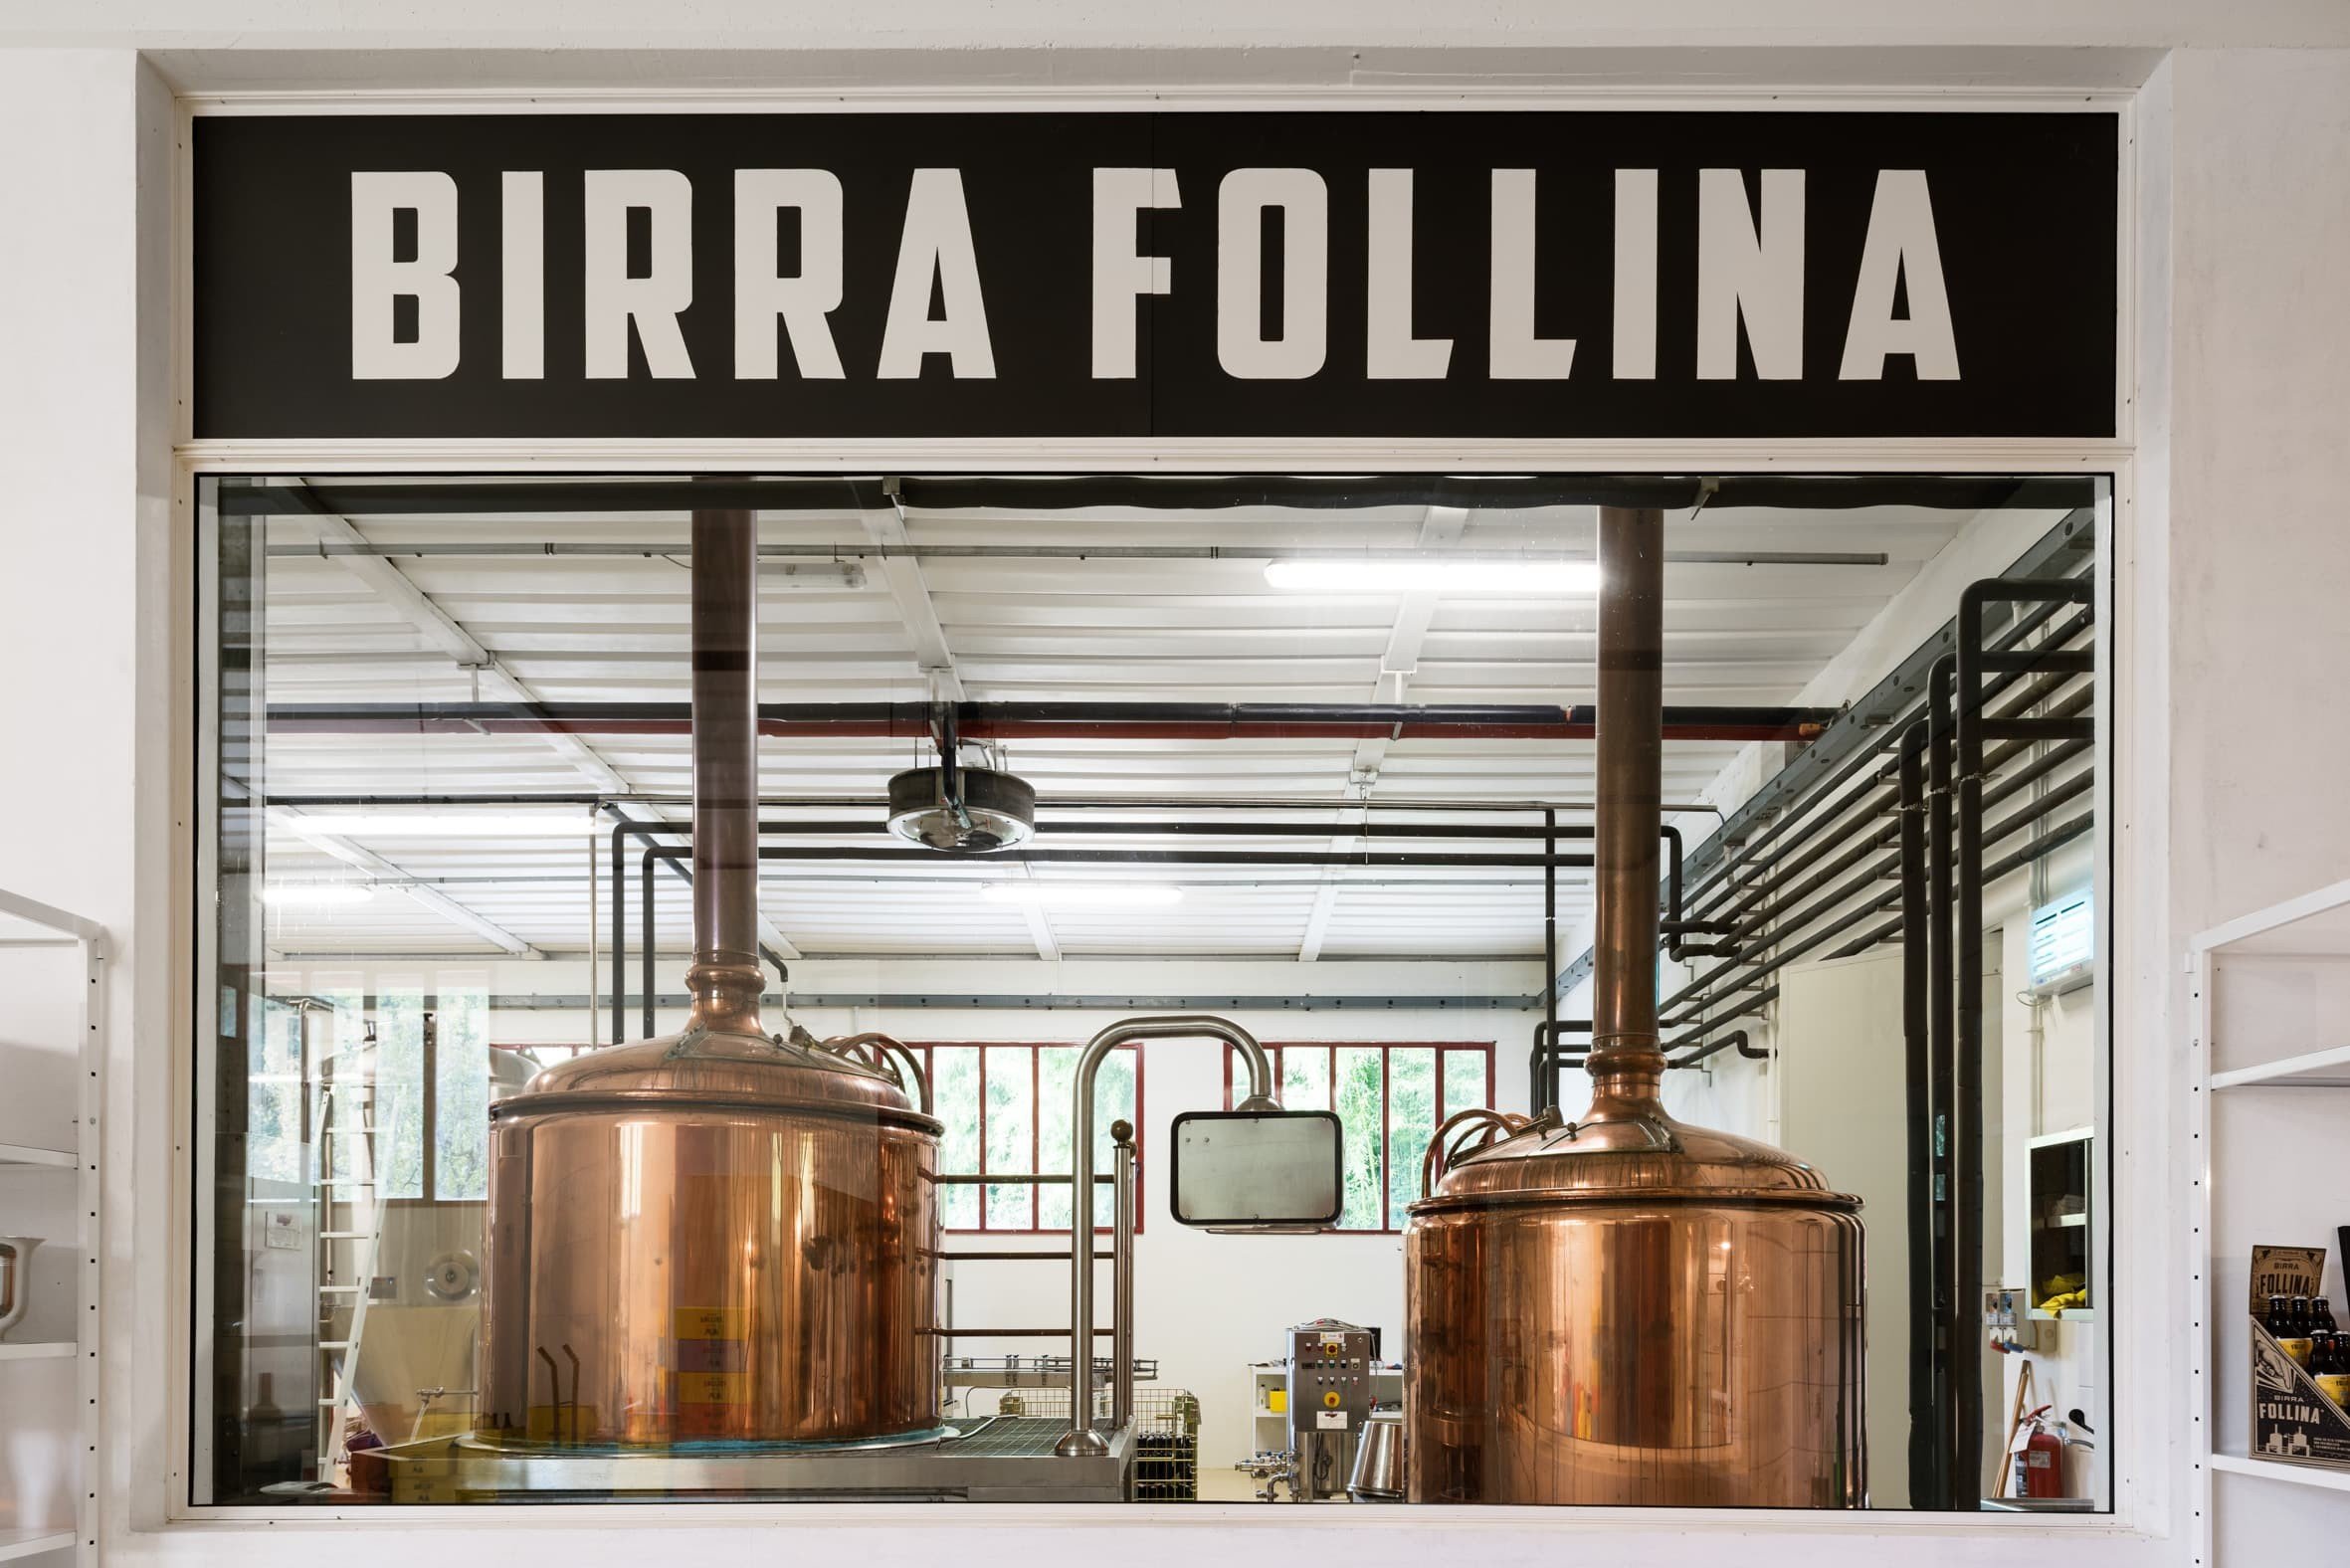 Follina brewery from Italy